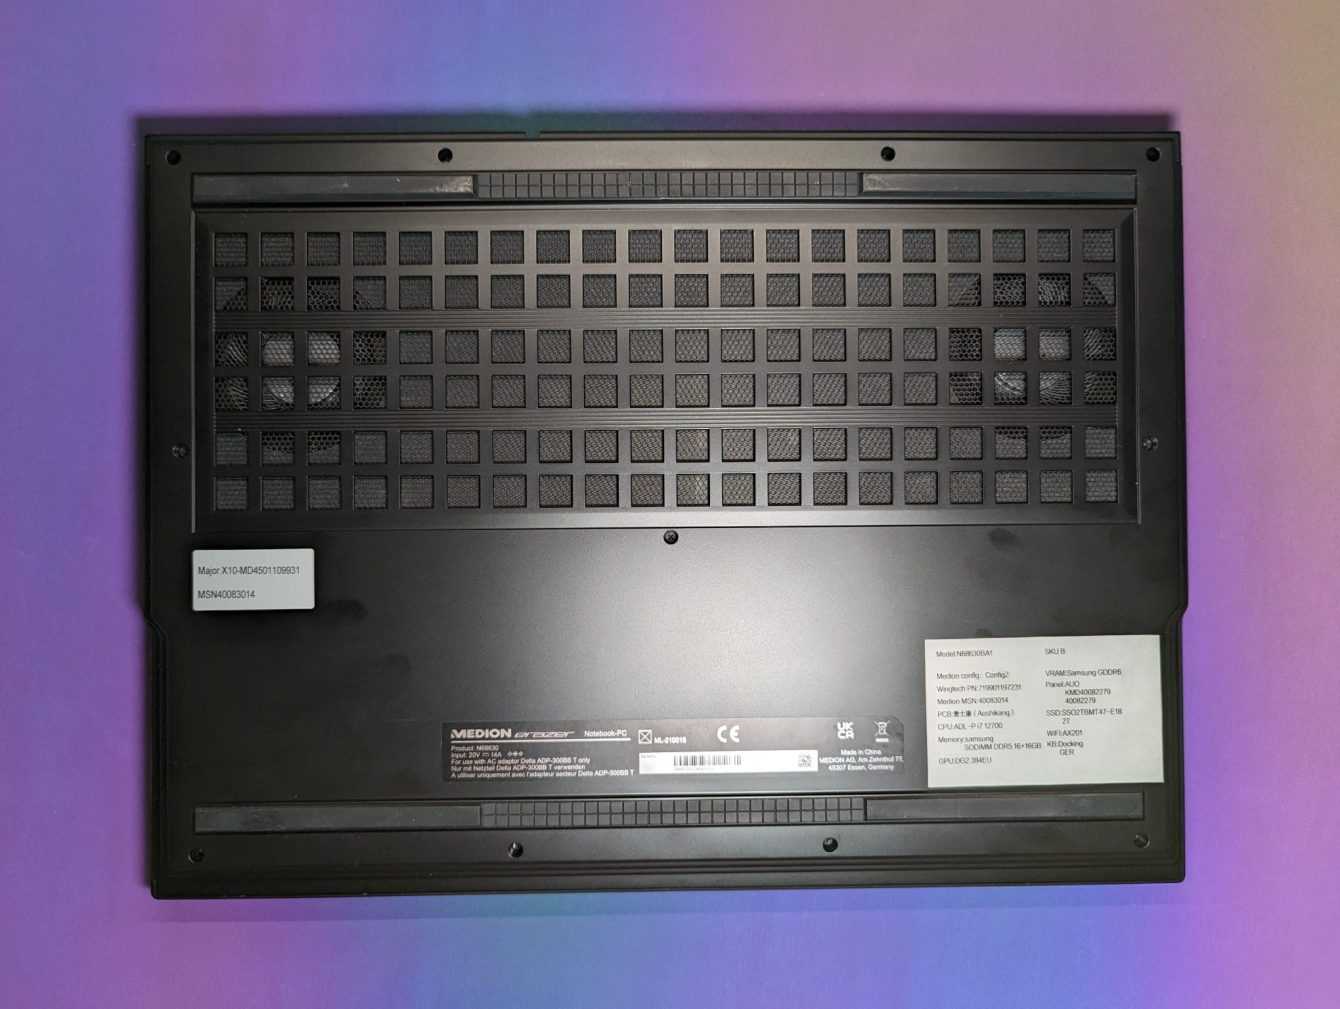 ERAZER Major X10 review: The laptop with Intel ARC